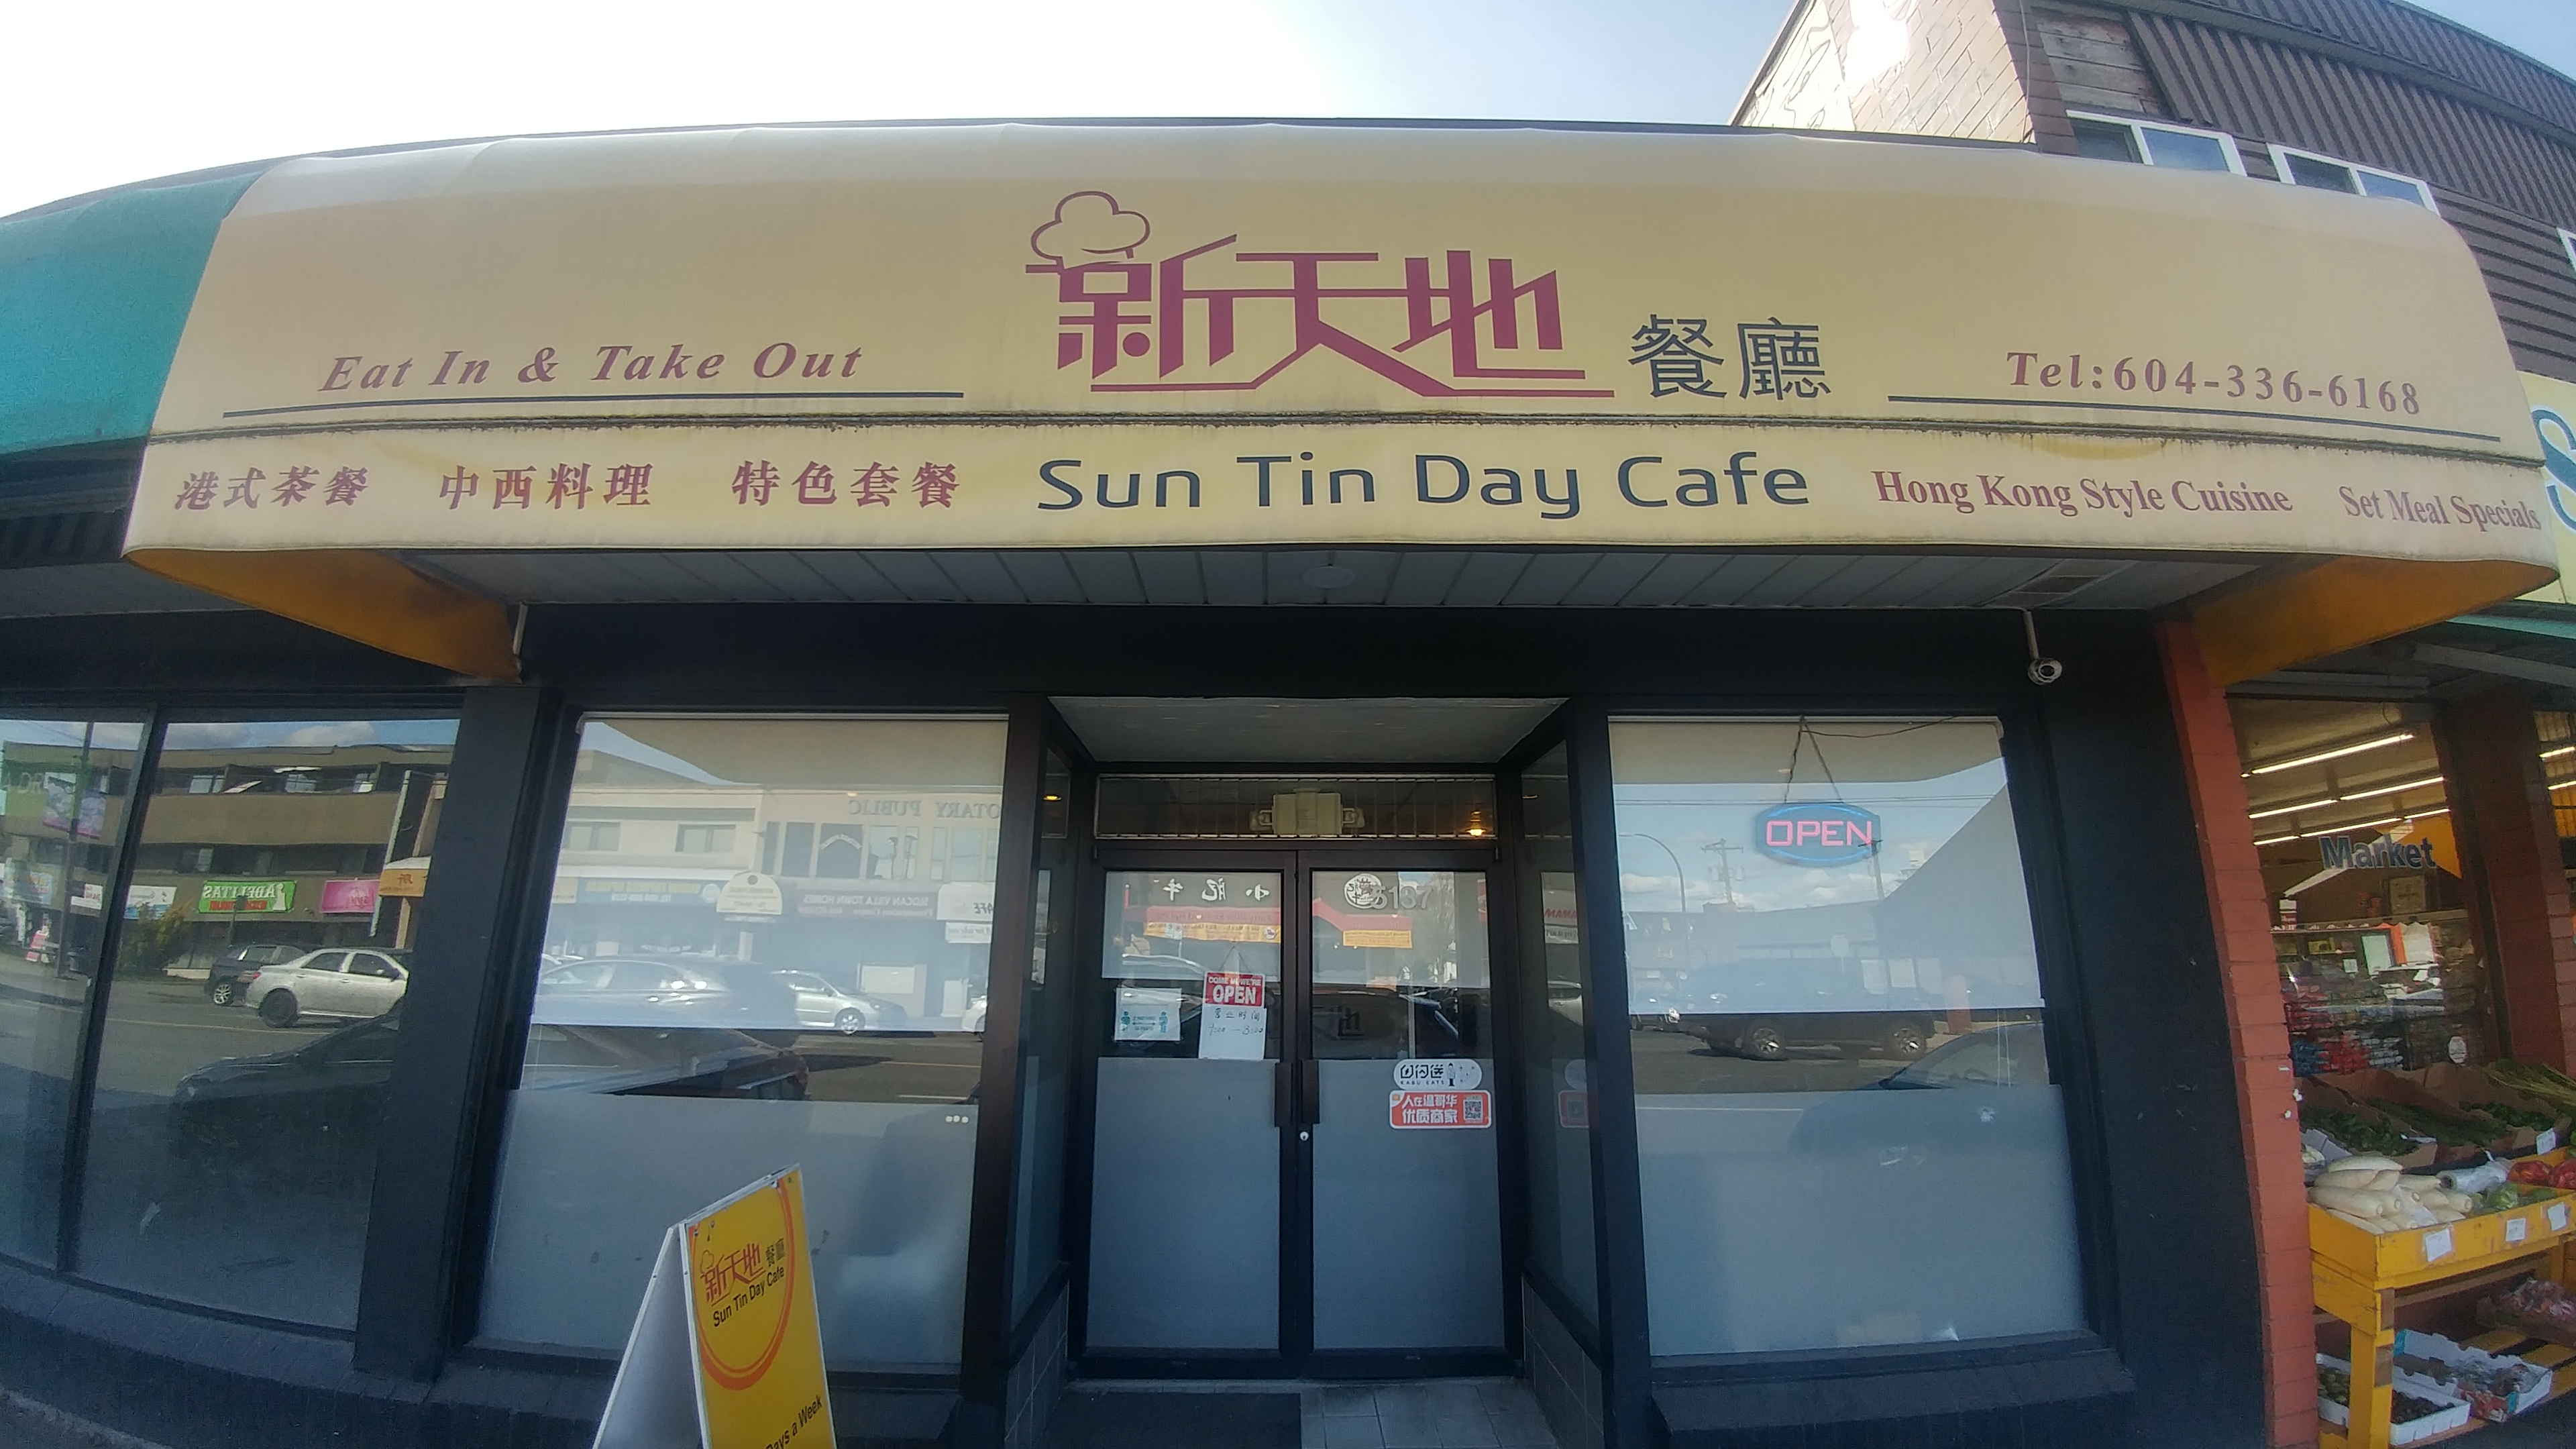 Sun Tin Day Cafe 新天地餐廳 -  Vancouver